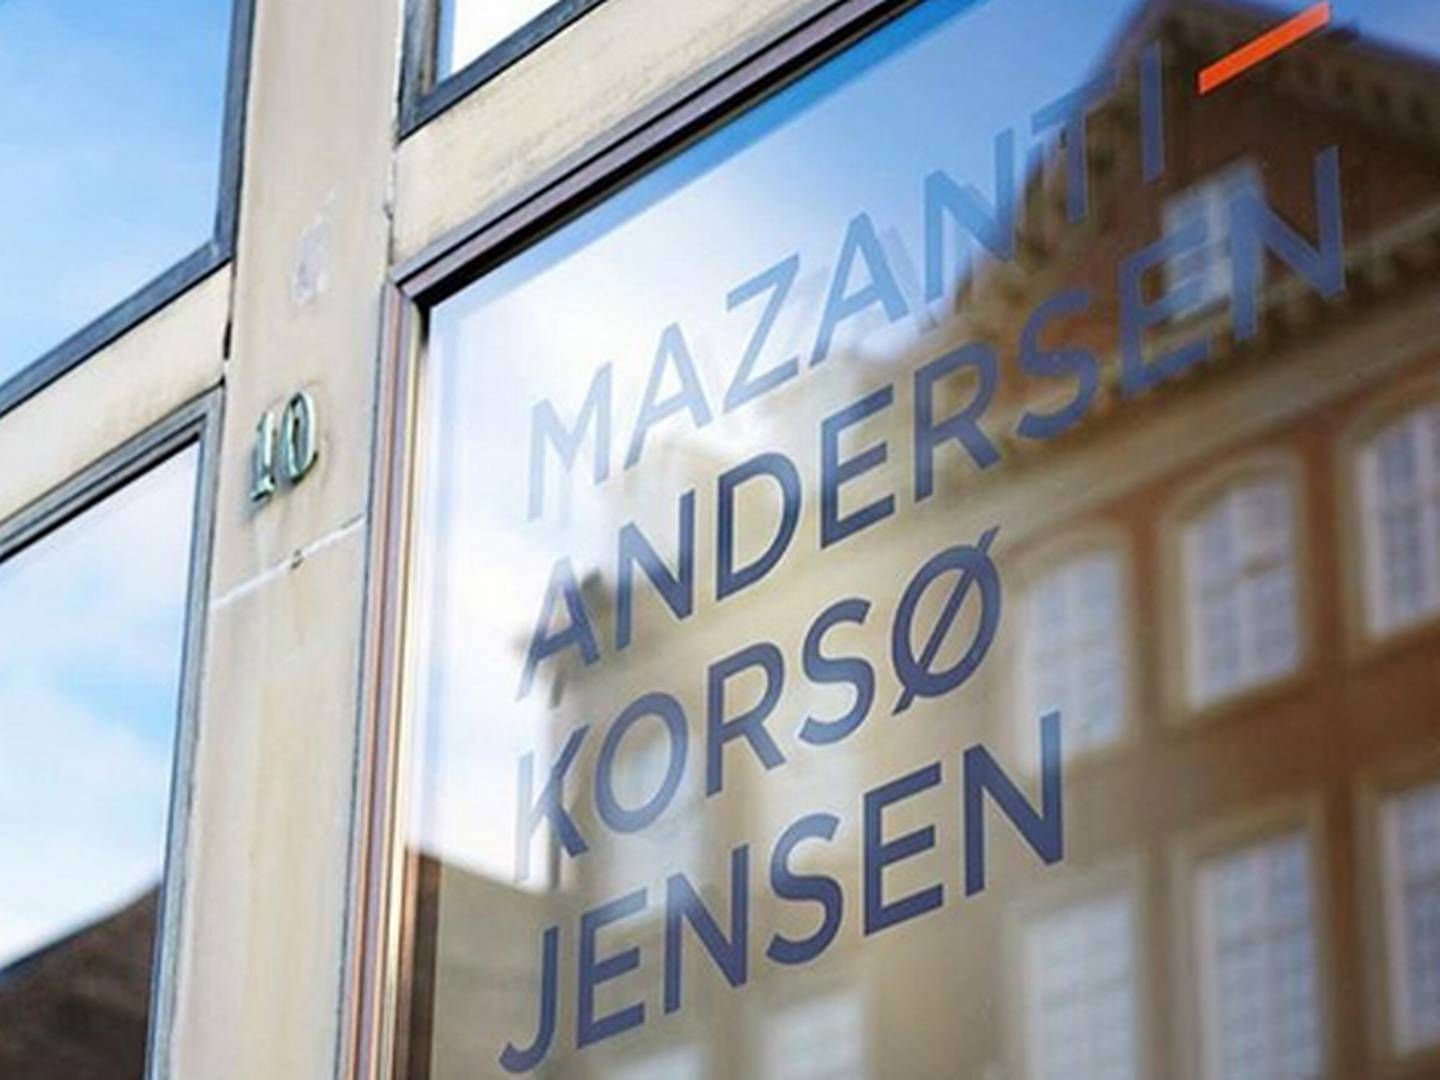 Mazanti-Andersen Korsø Jensen har lanceret Mazanti Pulse, der skal styrke båndet til investeringsverdenen. | Foto: Mazanti-Andersen Korsø Jensen/PR